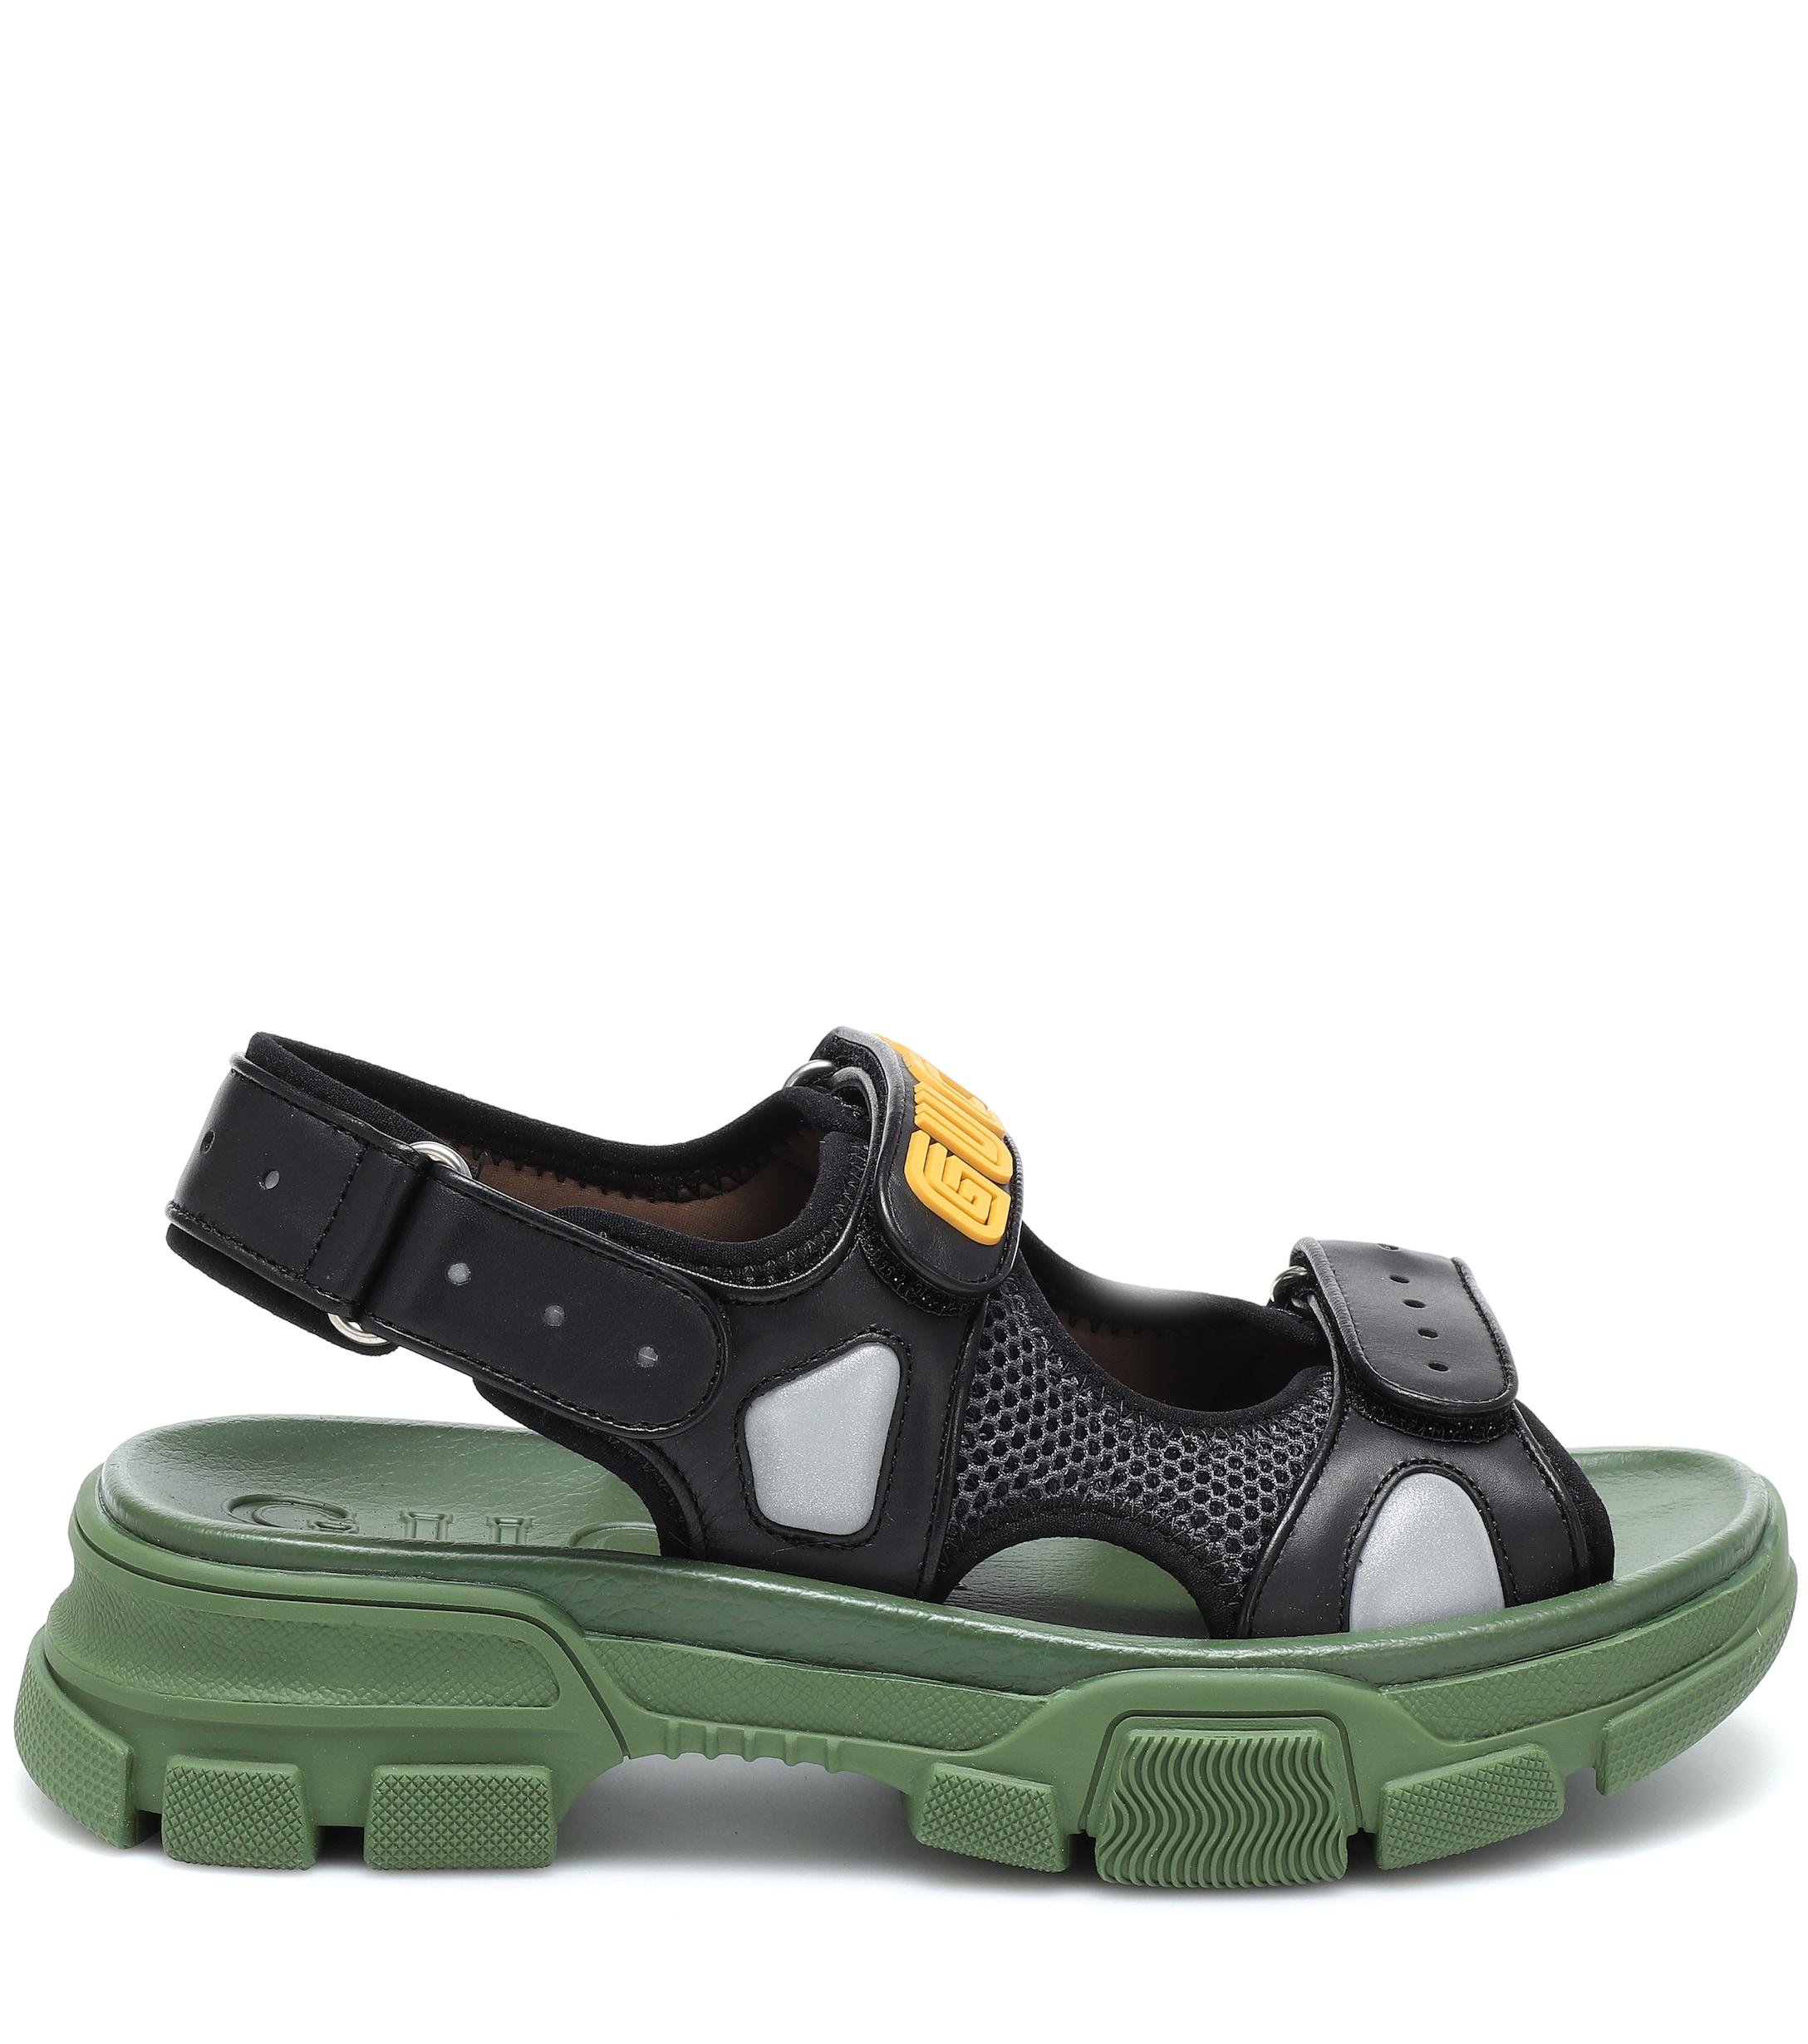 Gucci Black/Green Leather and Mesh Sega Sandals Size 44 Gucci